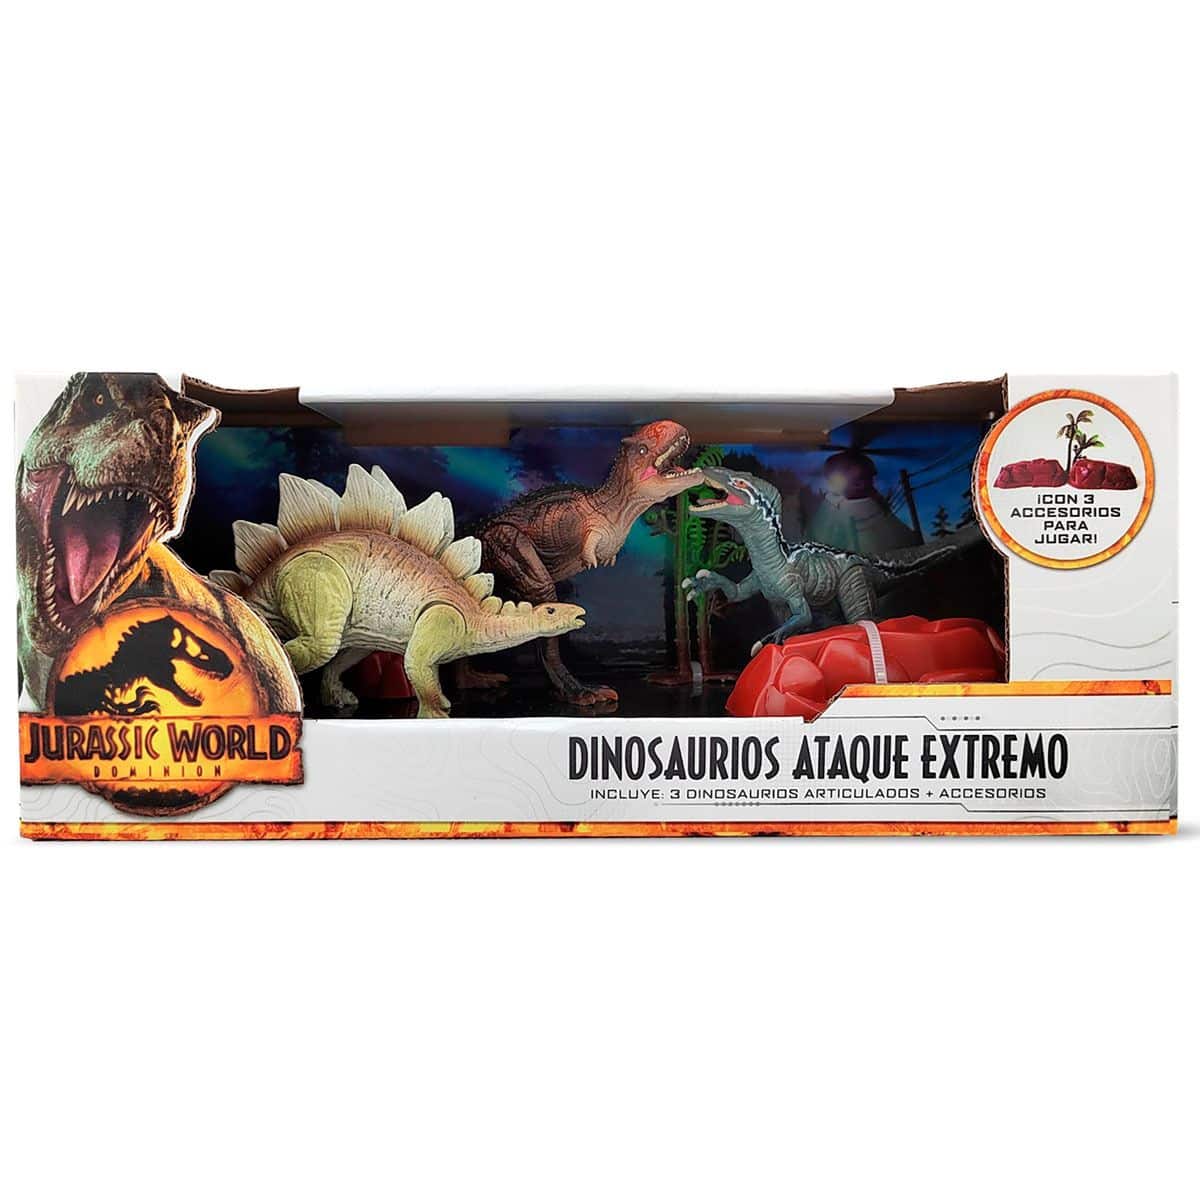 Jurassic World - 3 Dinosaurios C/ Accesorios - CL1122 - Vamos a Jugar!